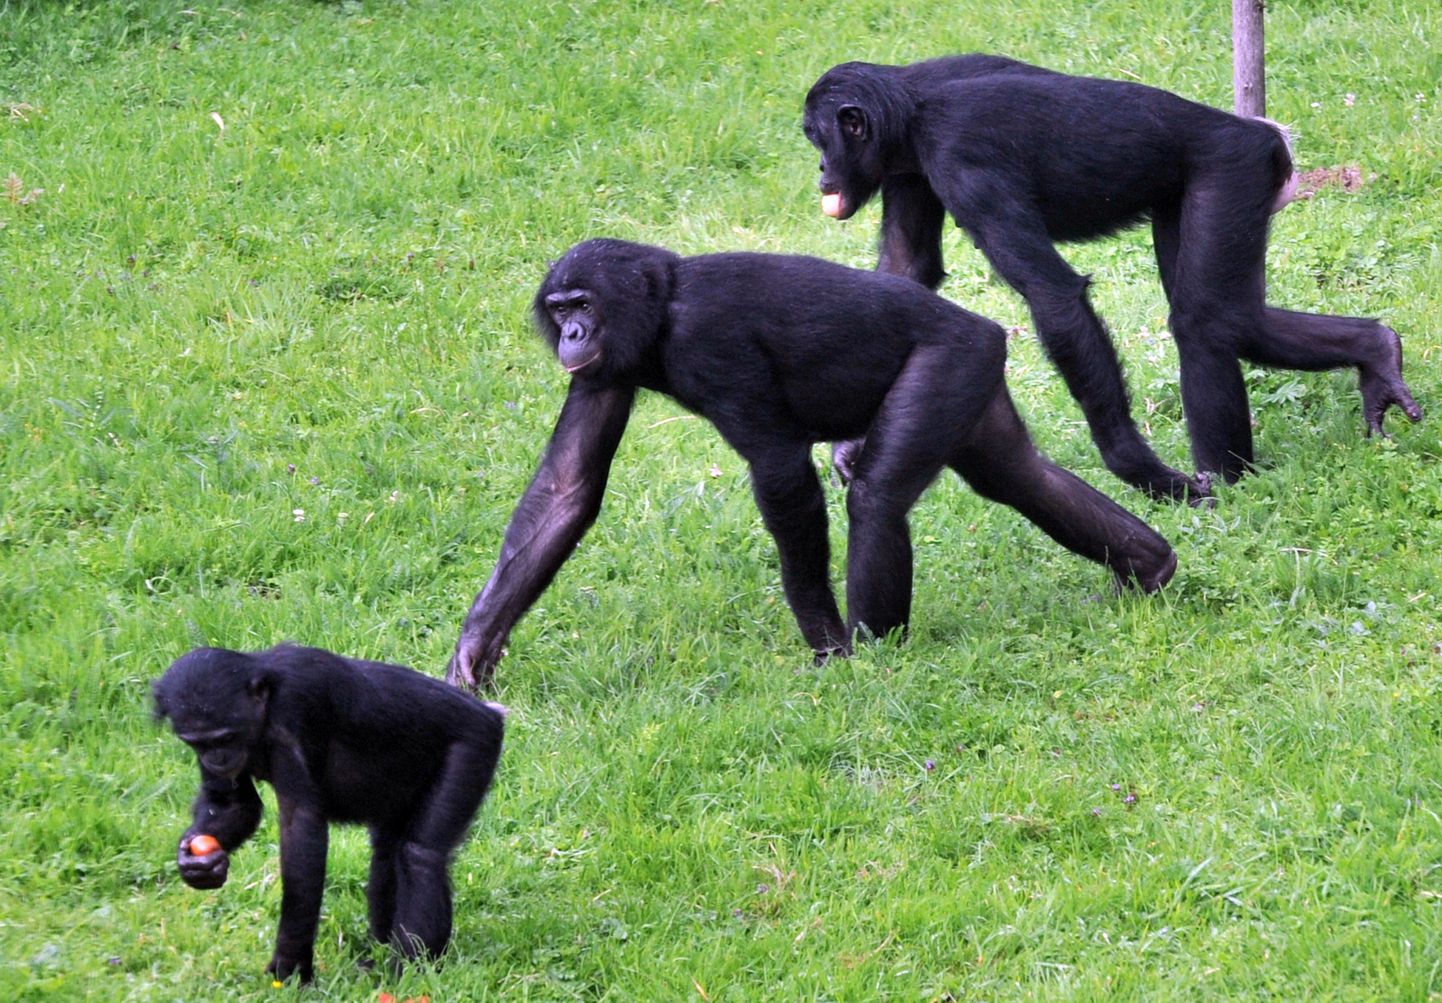 Bonobod.